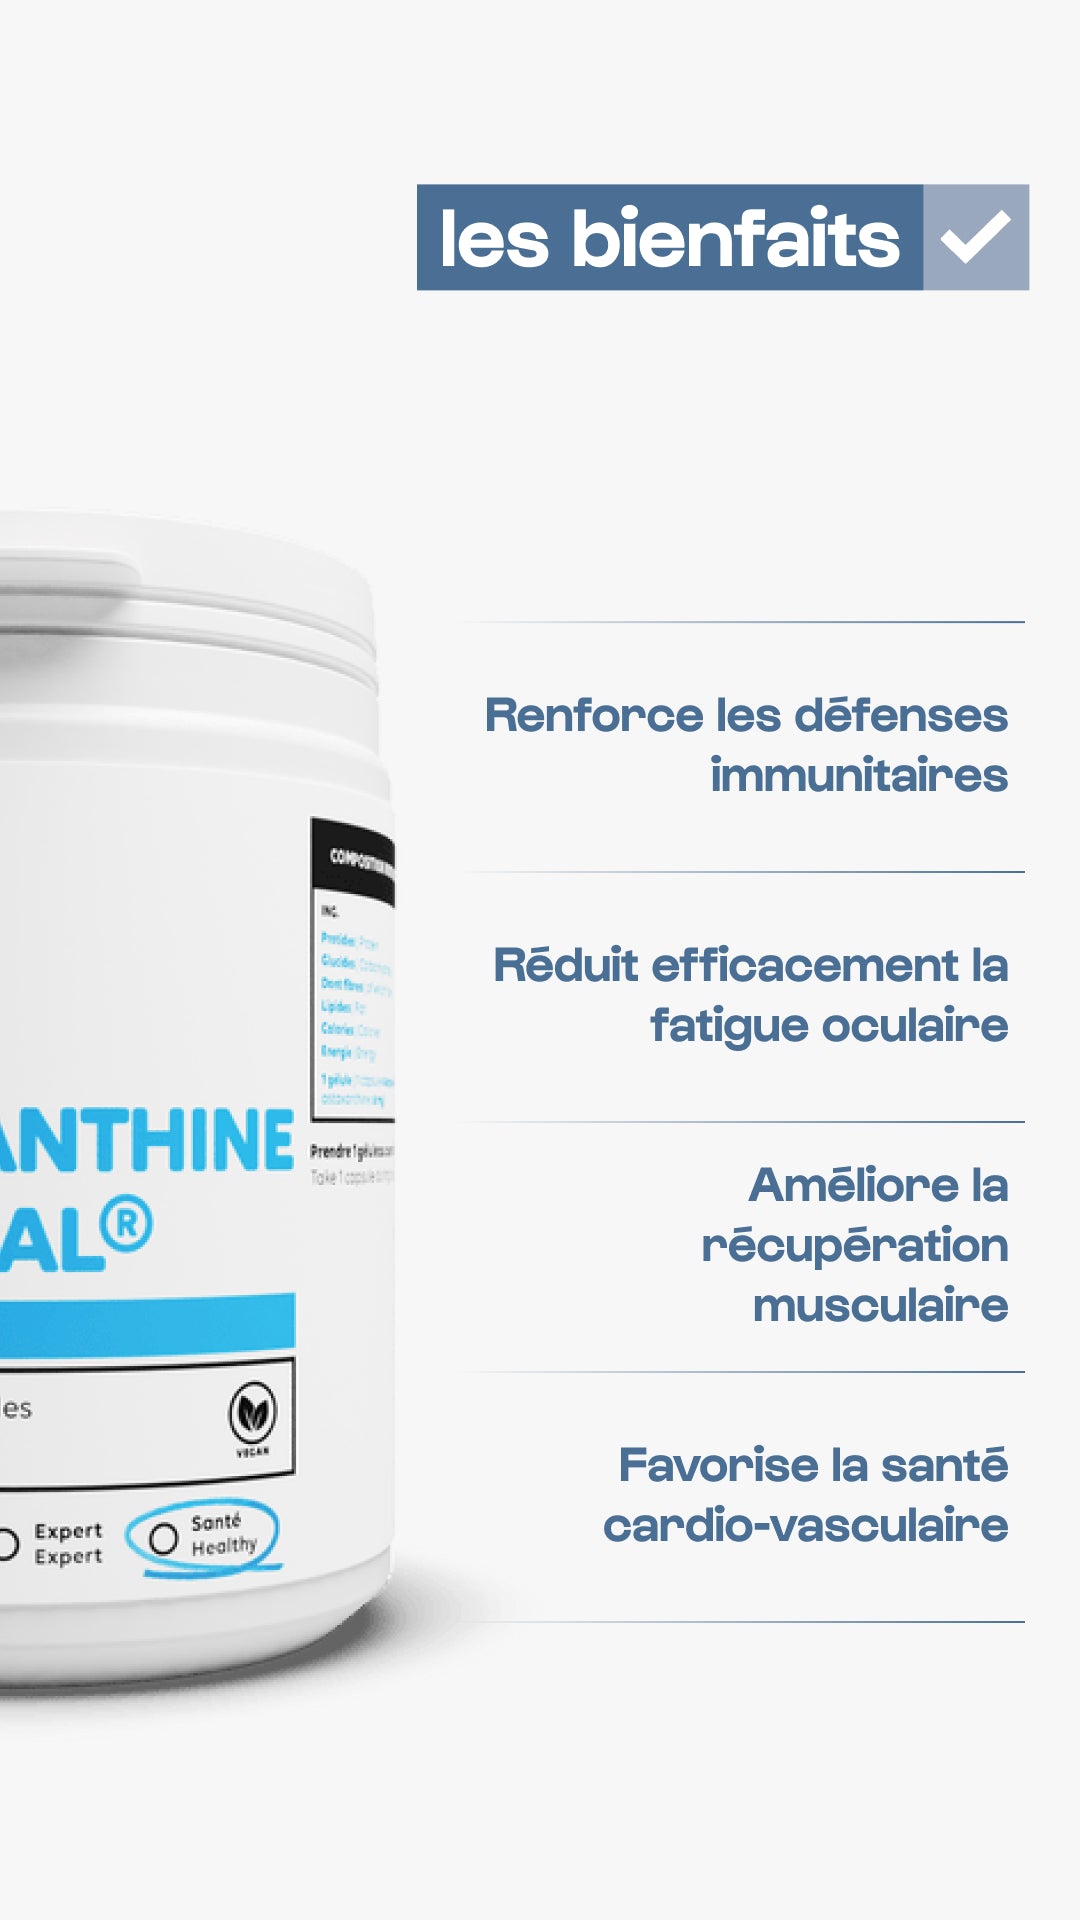 Astaxanthine Astareal® - 6mg